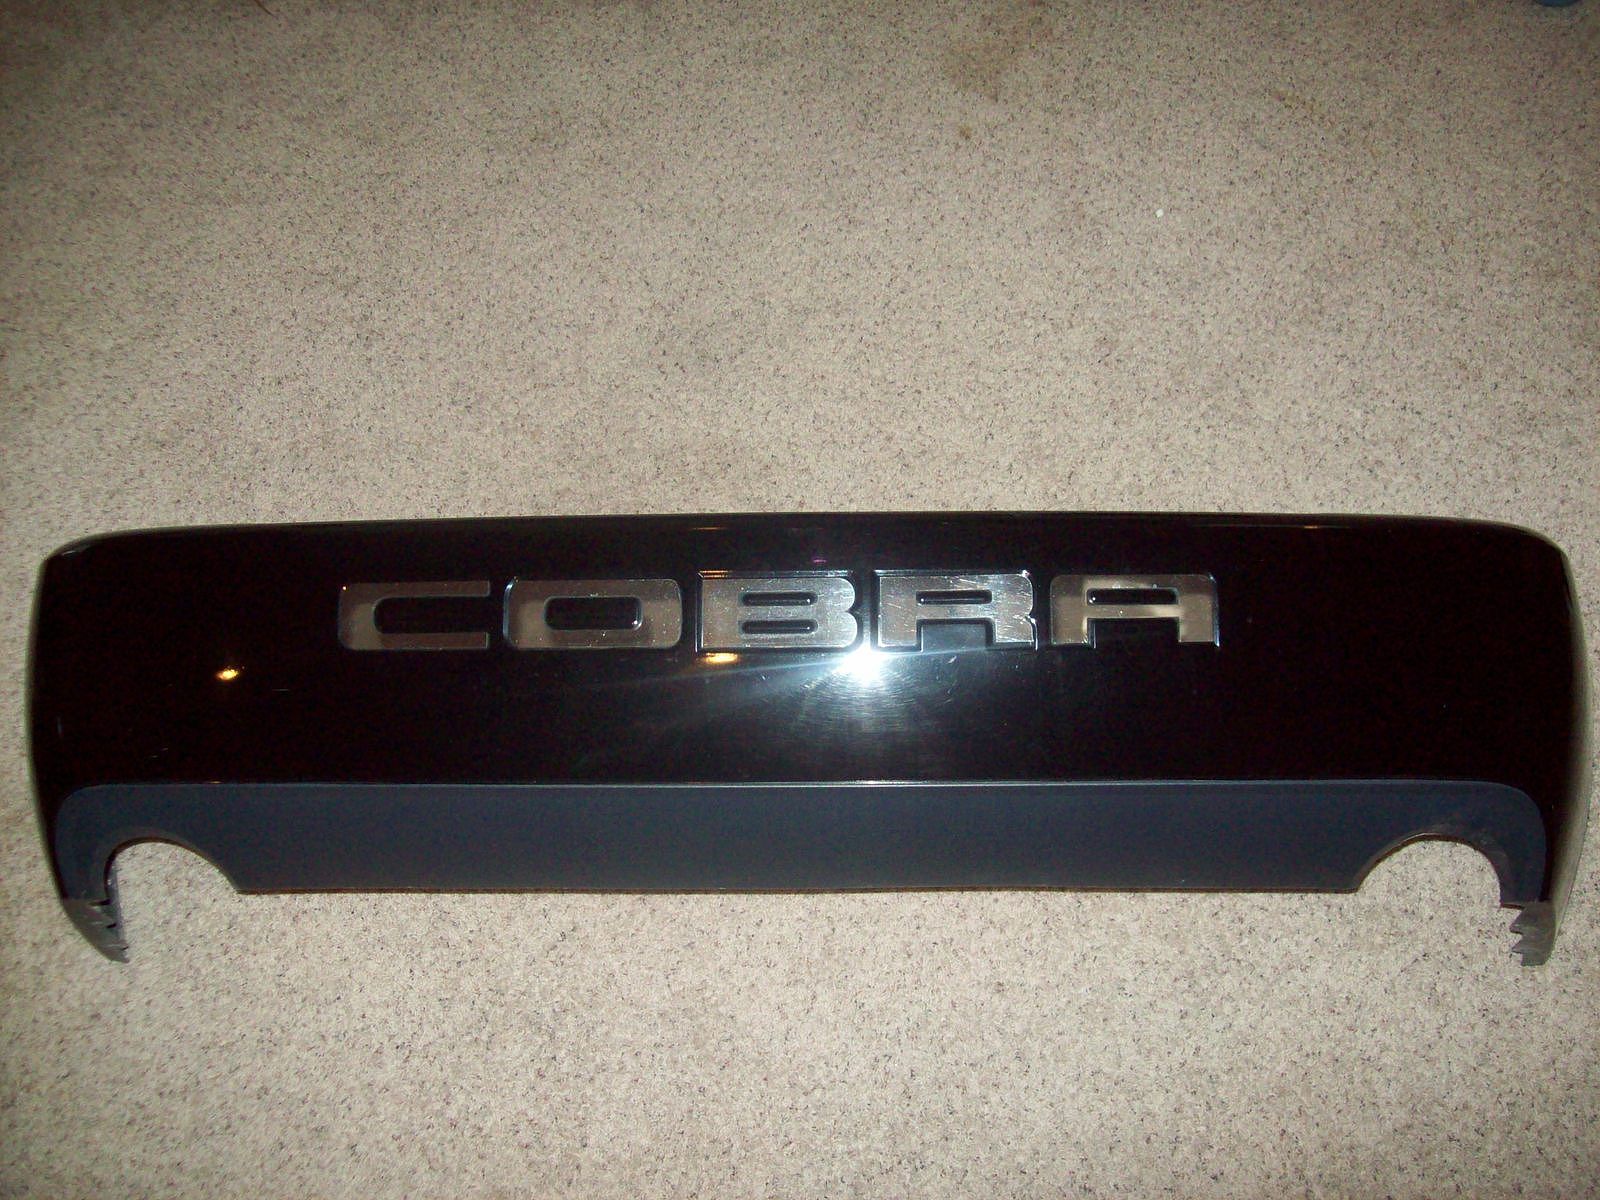 03 Cobra body kit 162.JPG